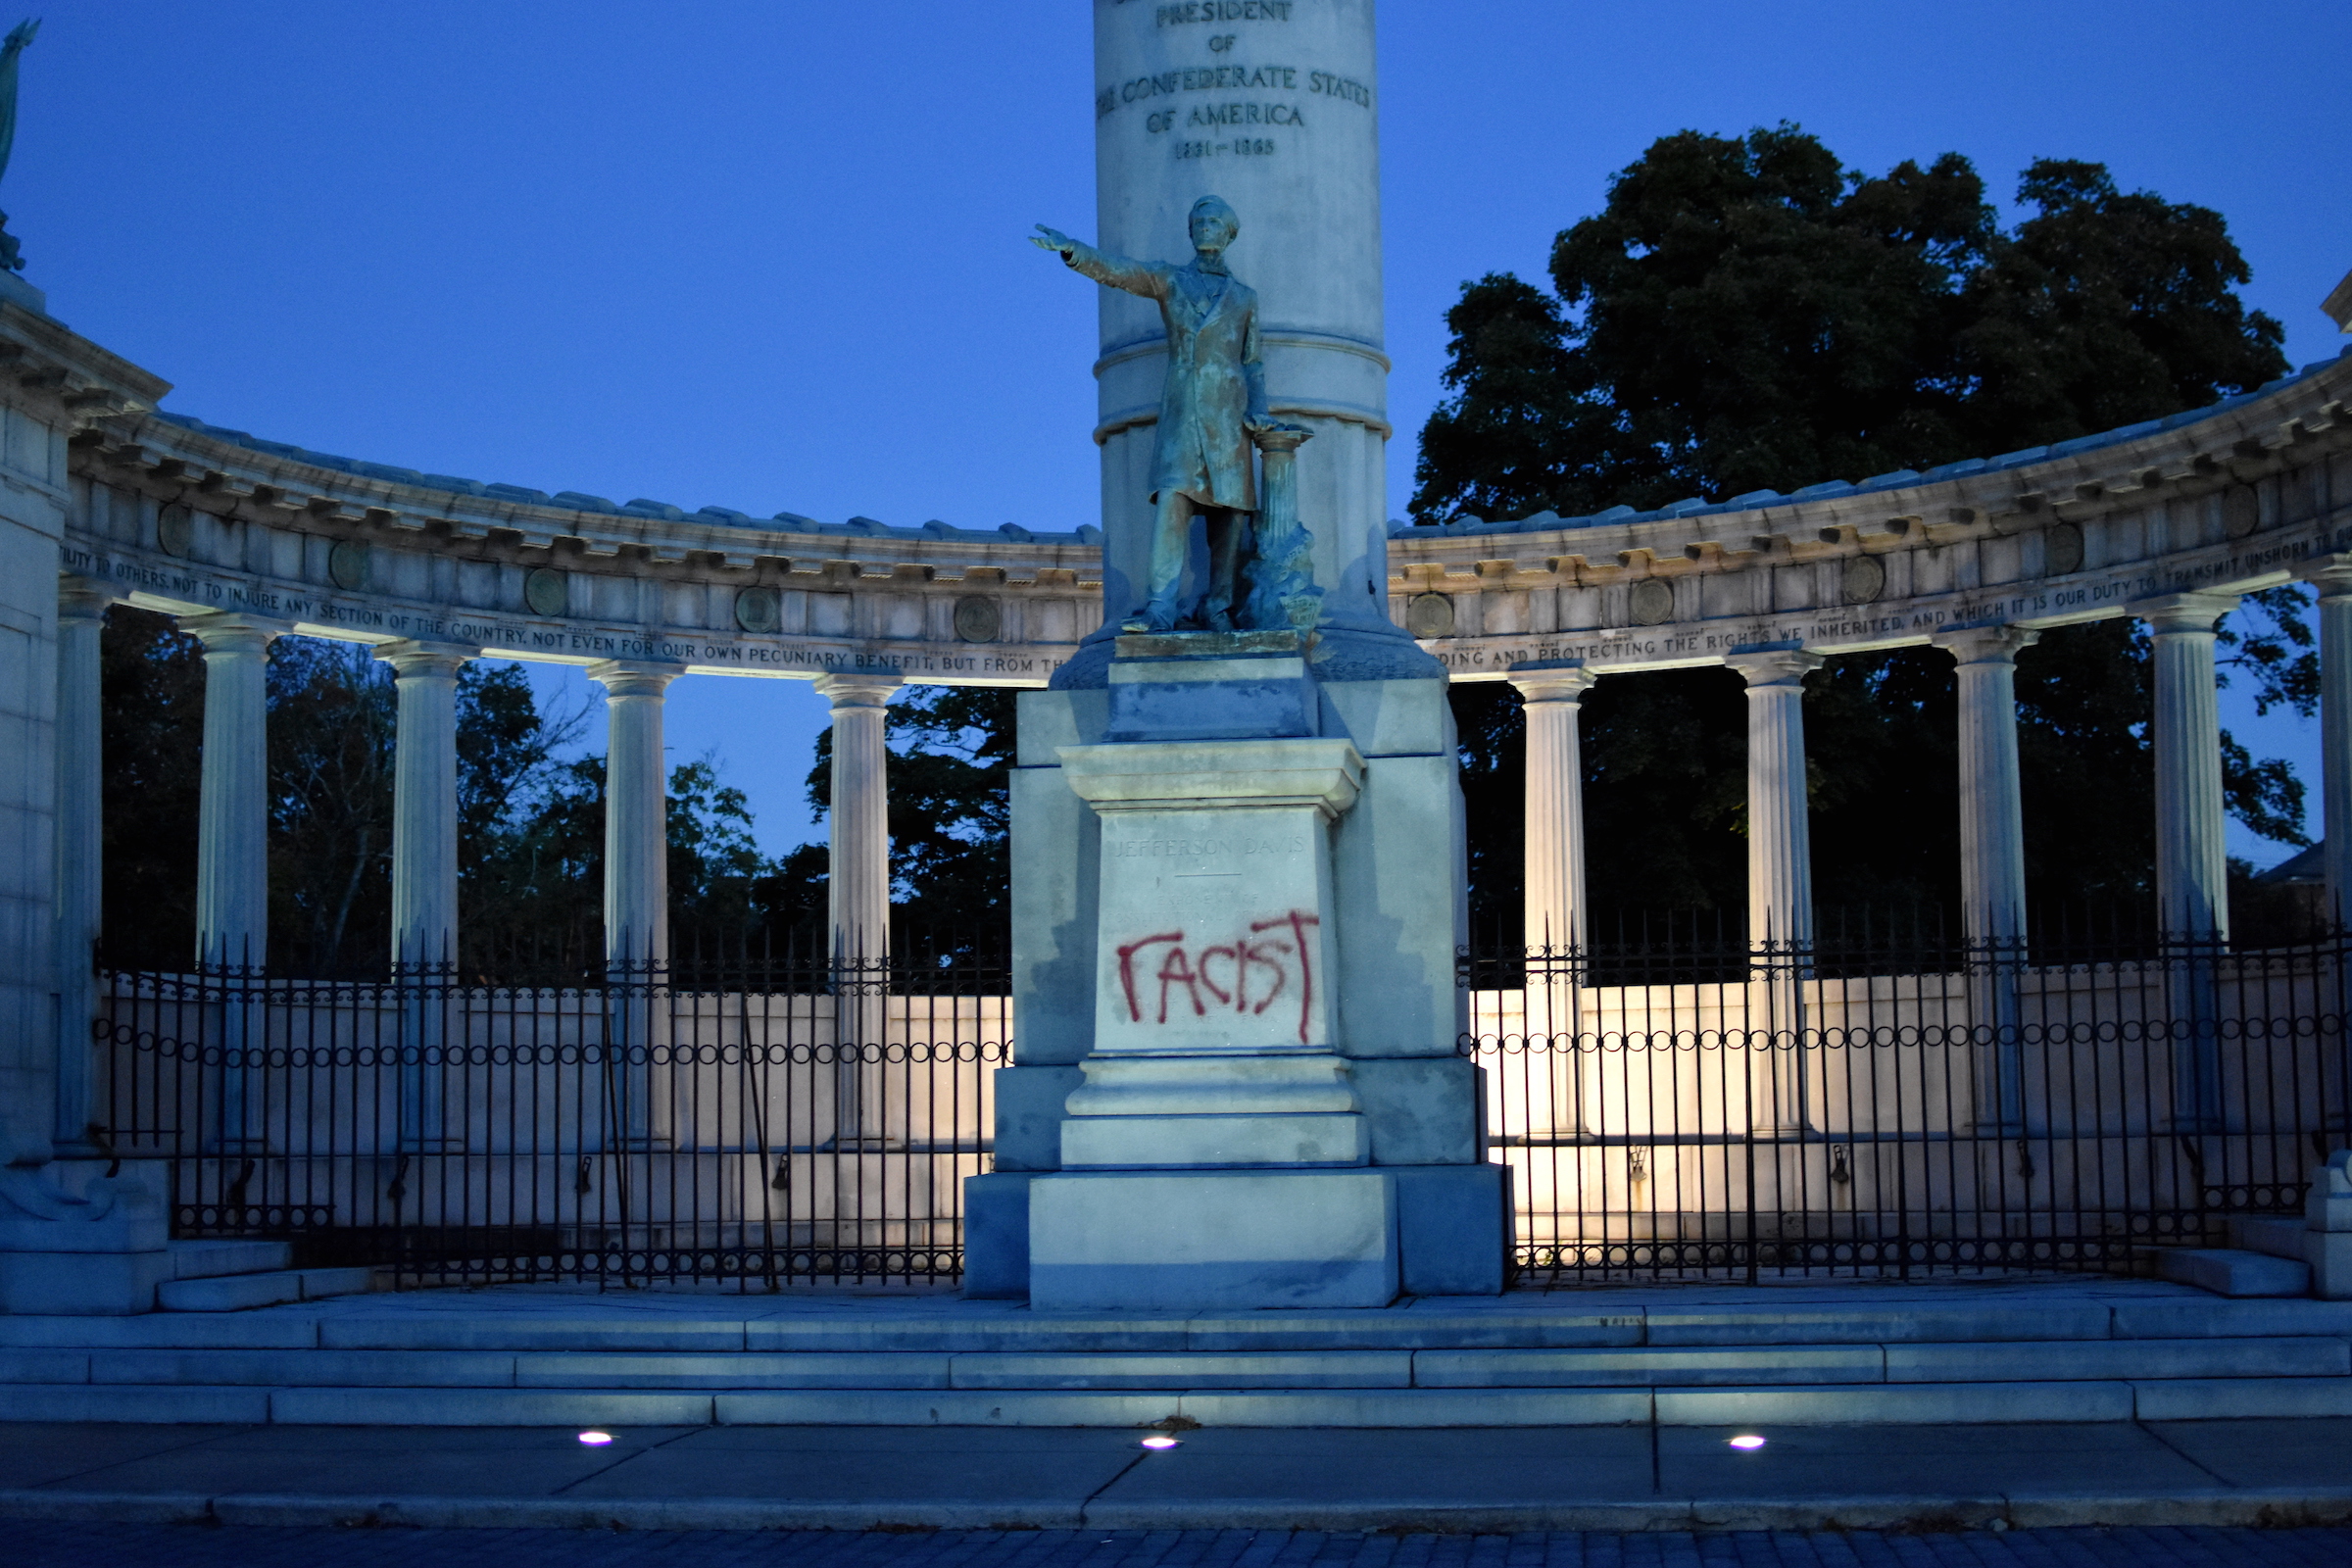 Photo of Jefferson Davis memorial in Richmond, Virginia with "racist" written in spray paint